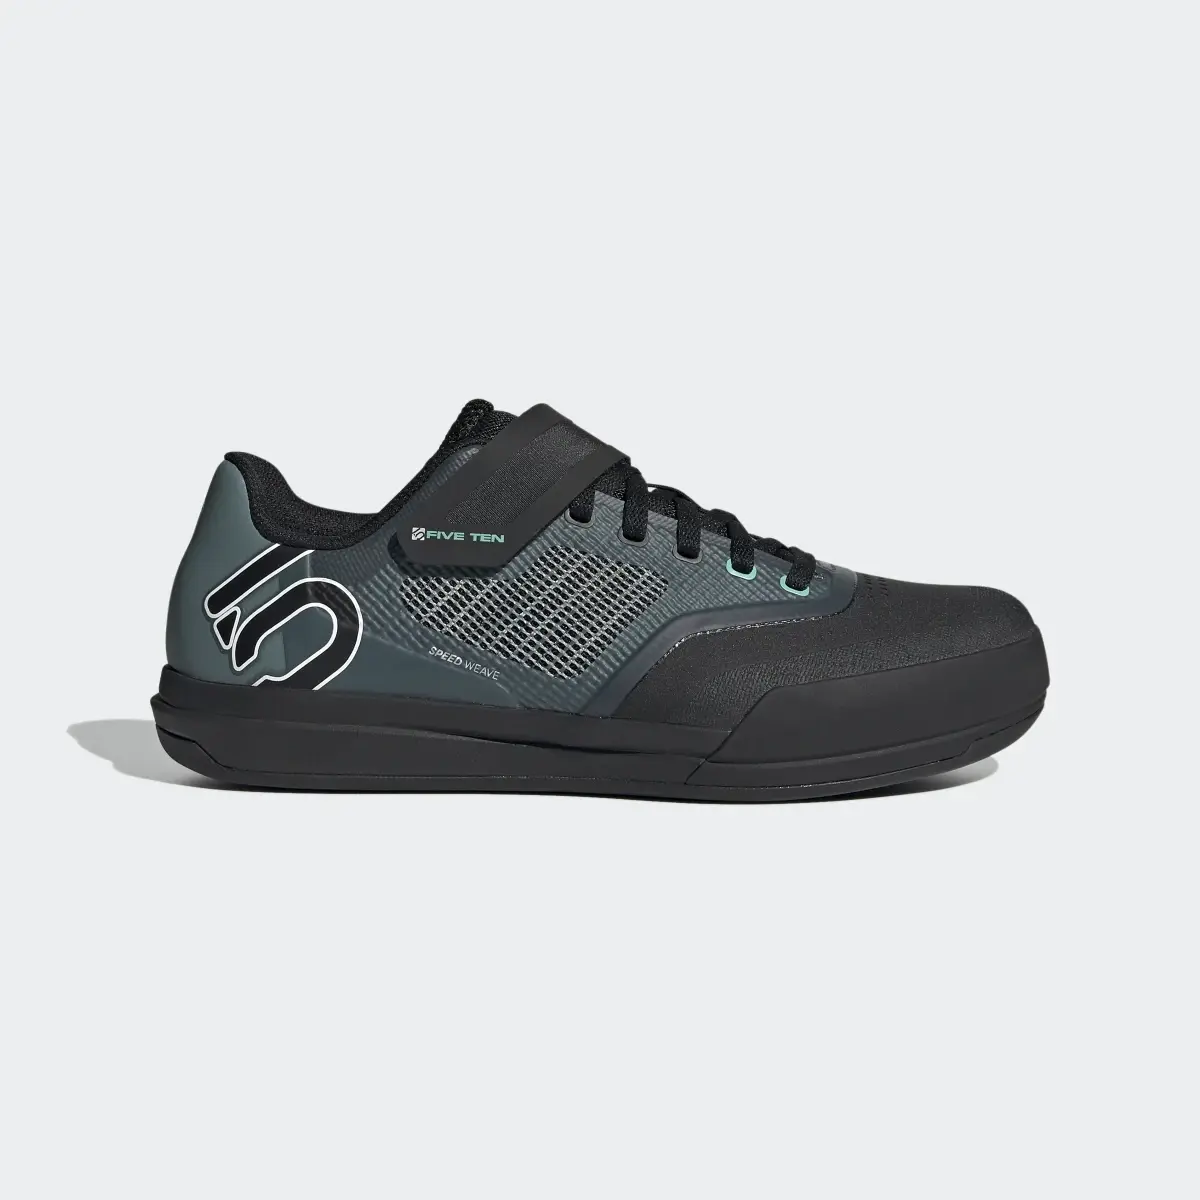 Adidas Sapatos de BTT Hellcat Pro Five Ten. 2